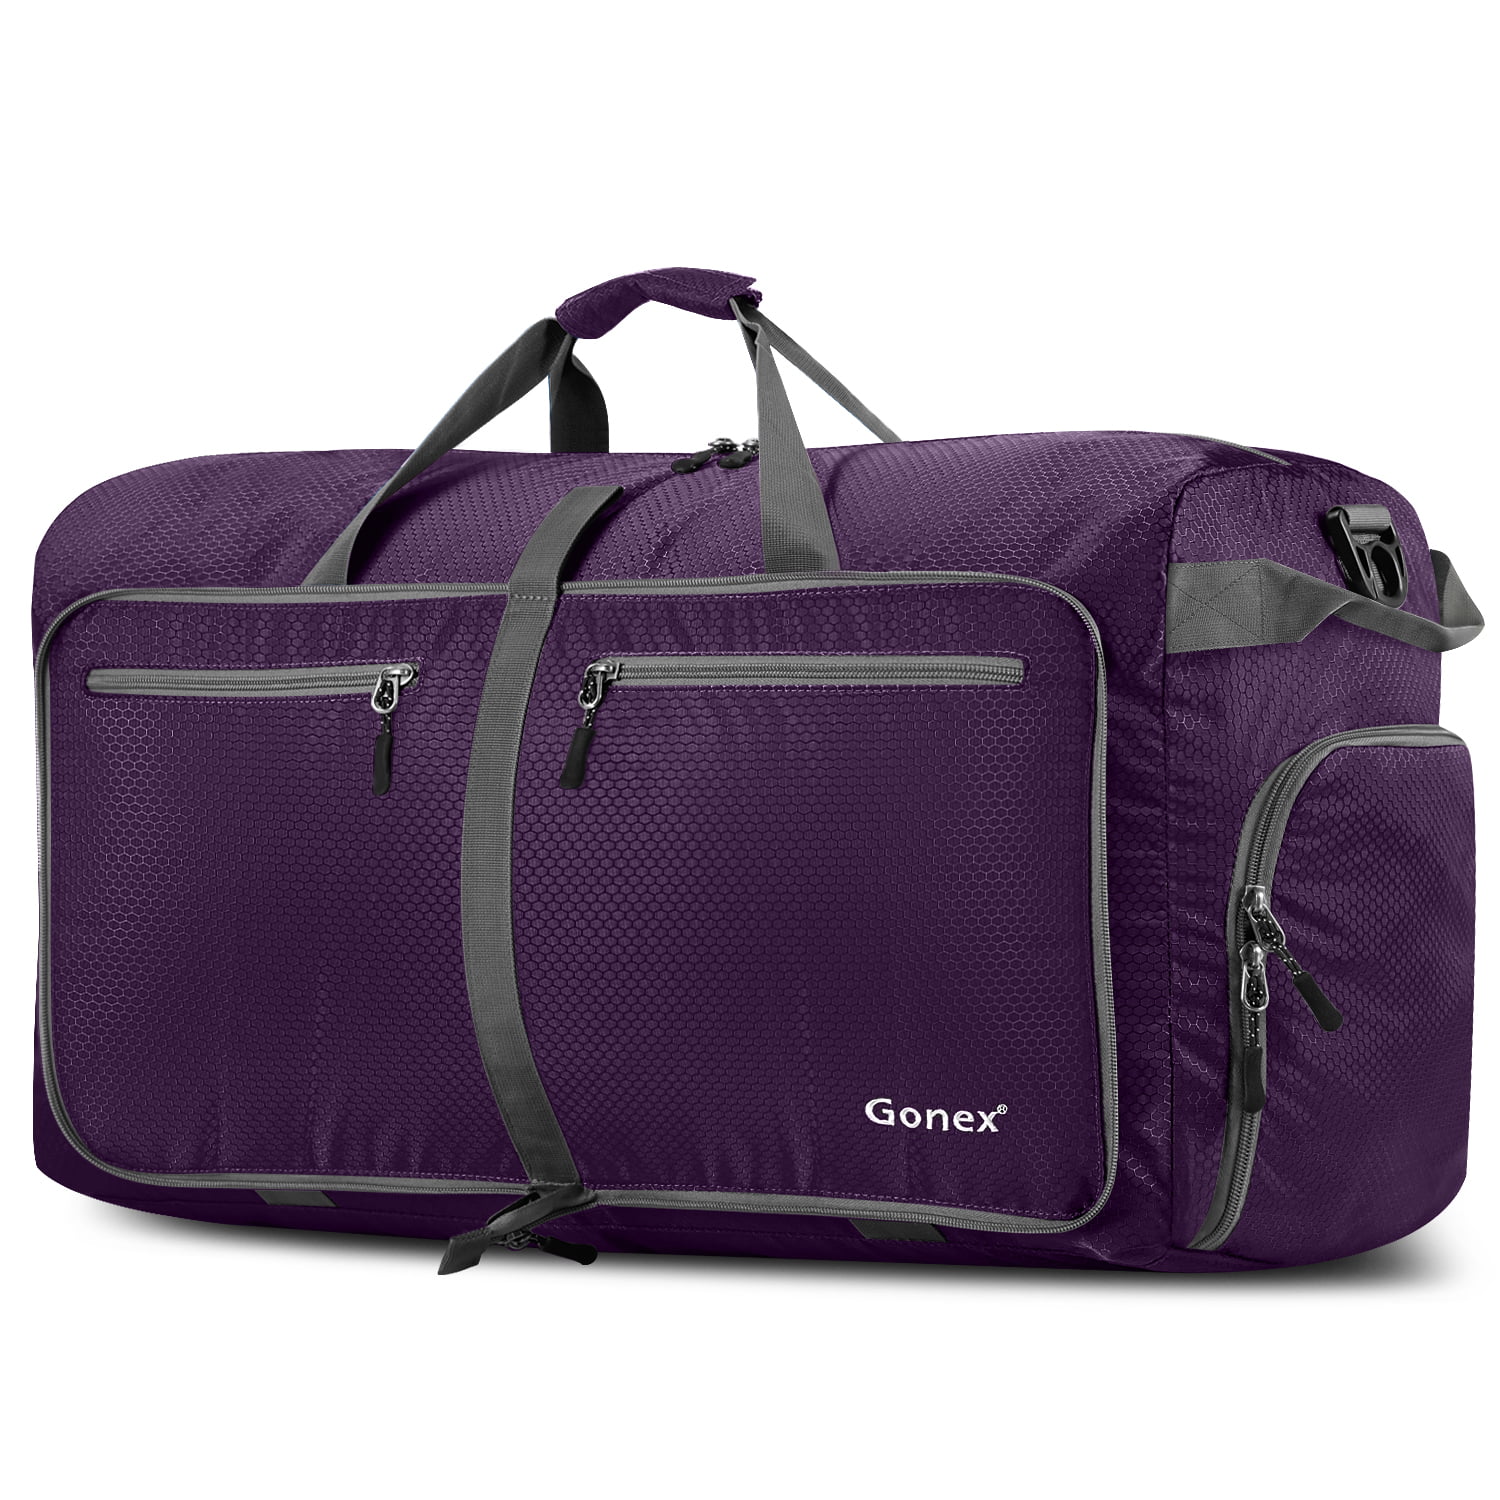 Travel Luggage Duffle Bag Lightweight Portable Handbag Rainbow Unicorn Horse Print Large Capacity Waterproof Foldable Storage Tote